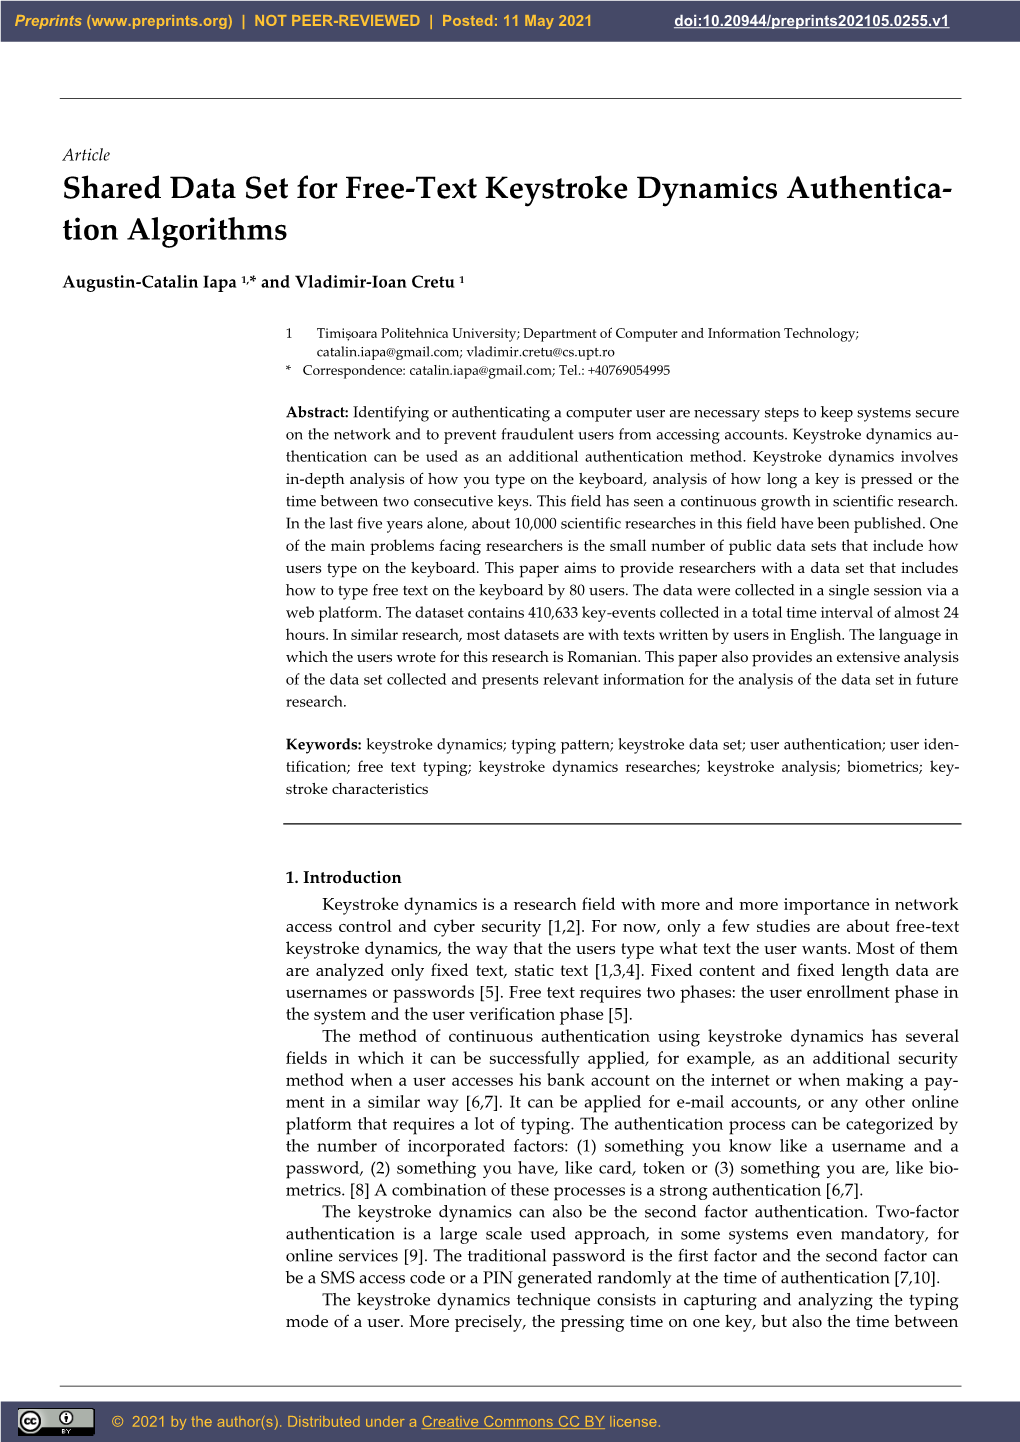 Shared Data Set for Free-Text Keystroke Dynamics Authentica- Tion Algorithms